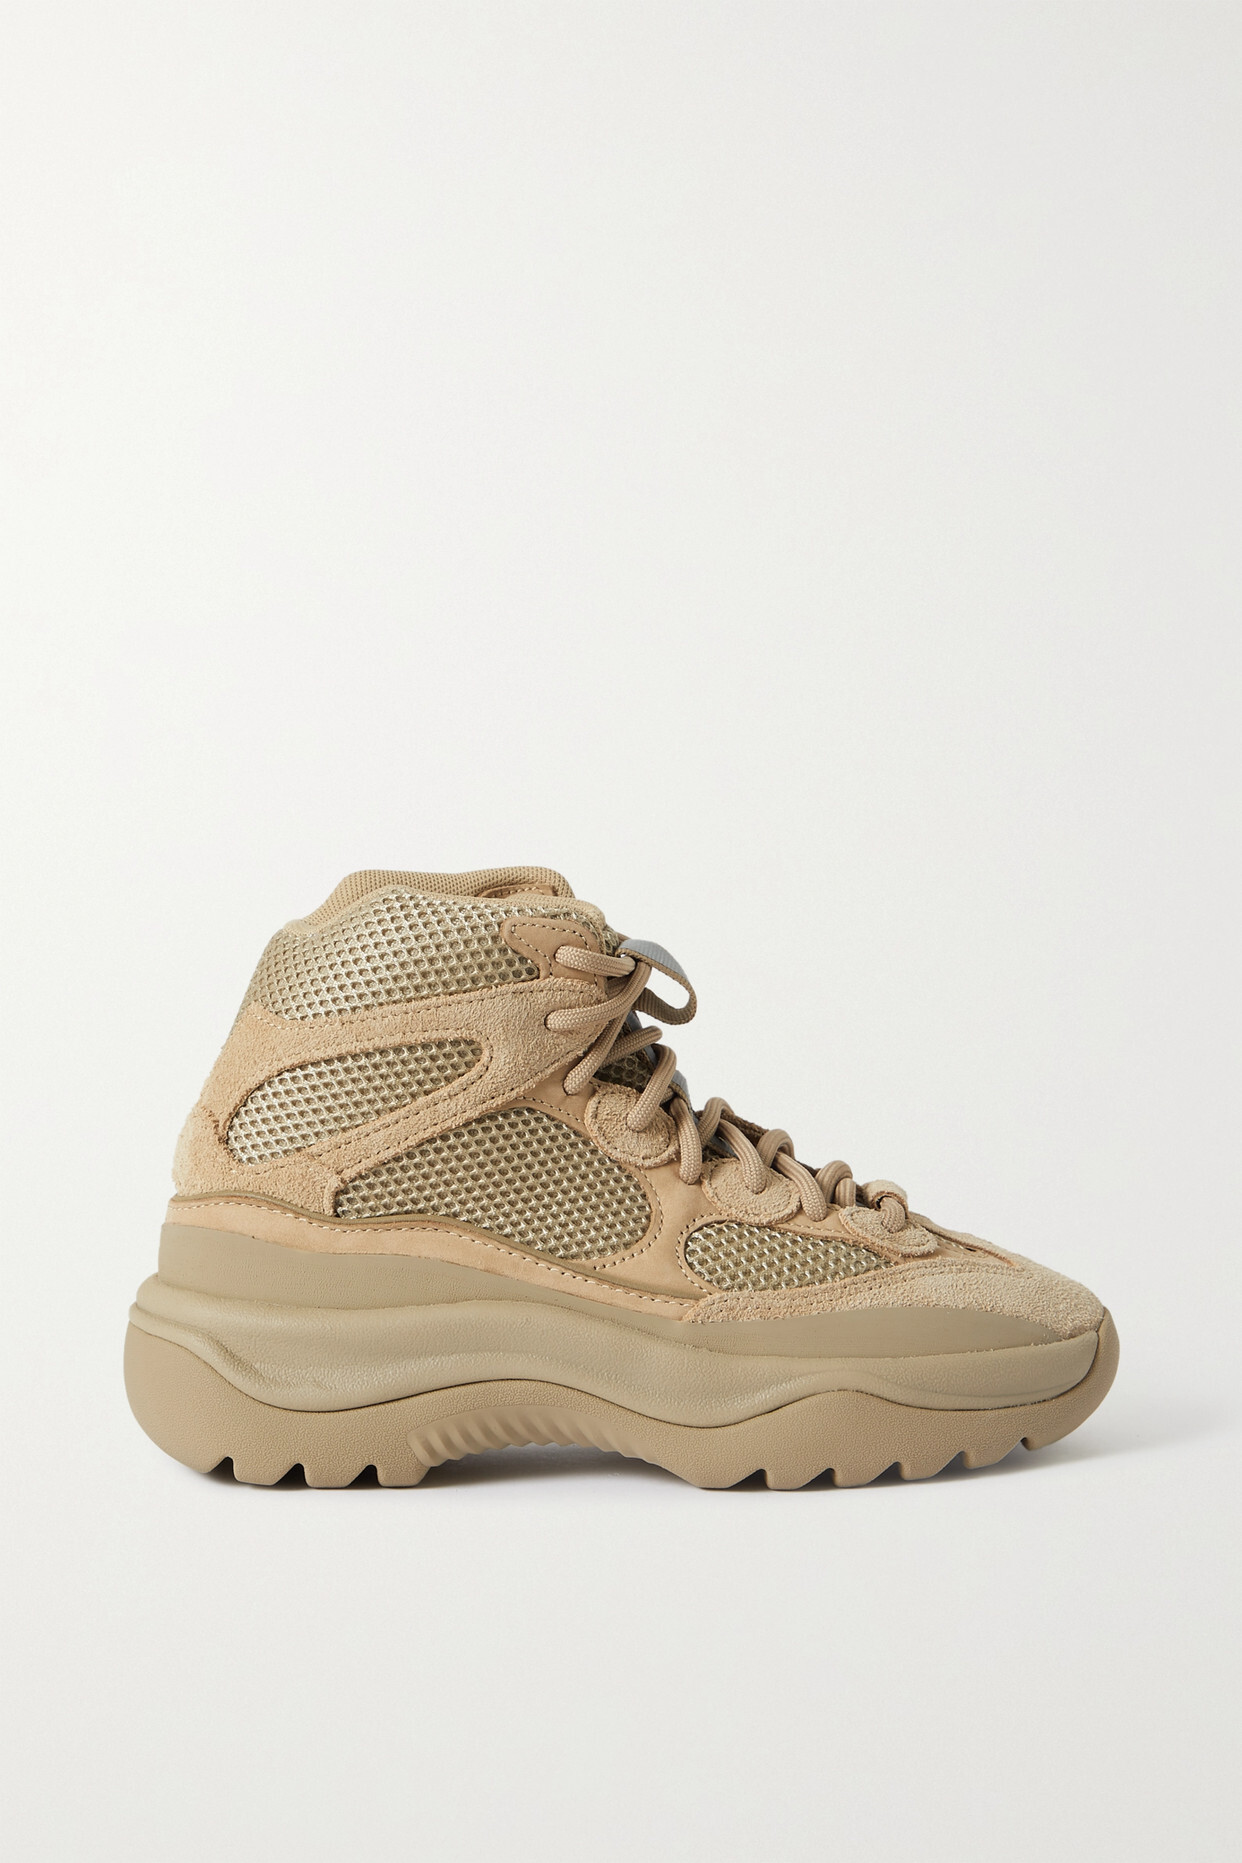 adidas Originals - Yeezy Suede And Nubuck-trimmed Mesh Desert Boots - Neutrals